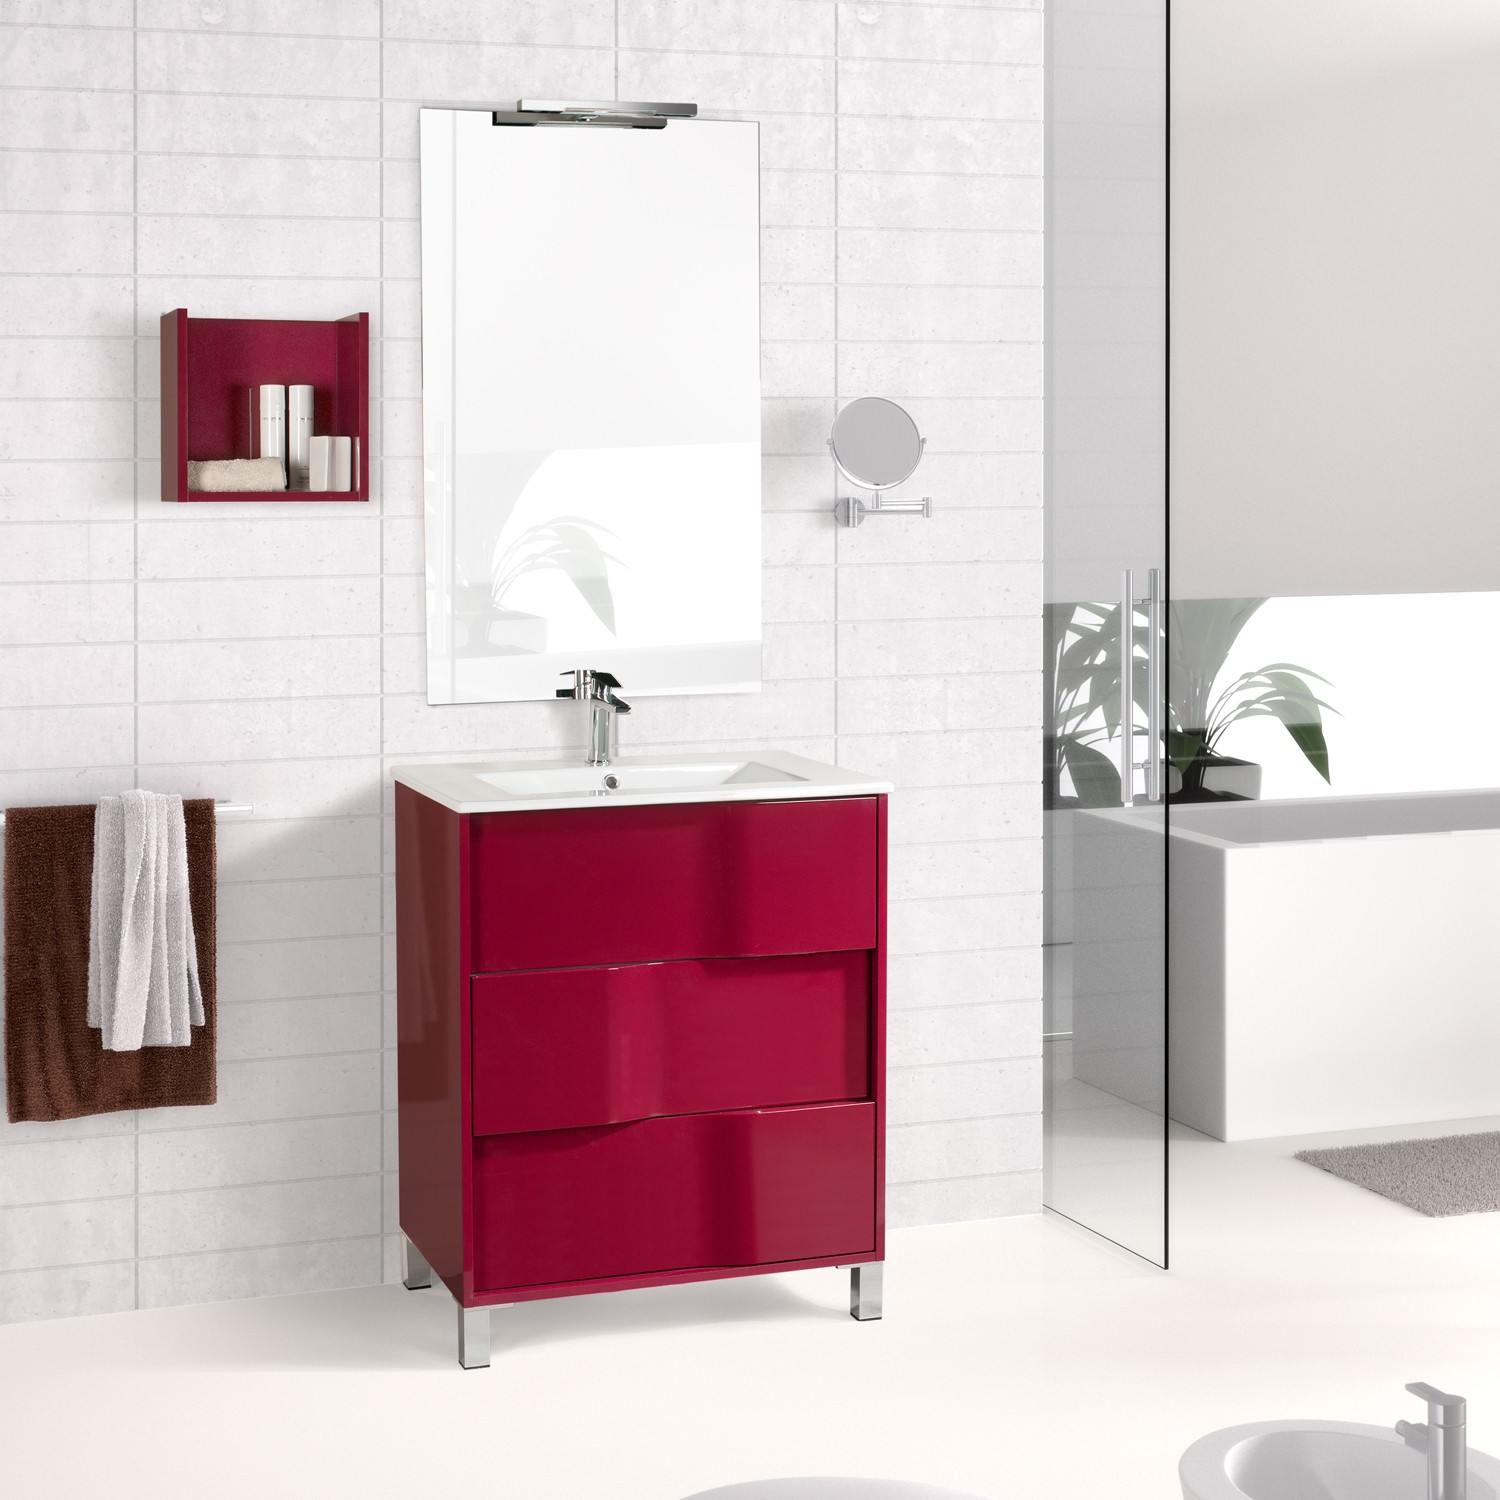 Eviva Toronto 24dark Red Free Standing Bathroom Vanity With White Porcelain Sink Decors Us